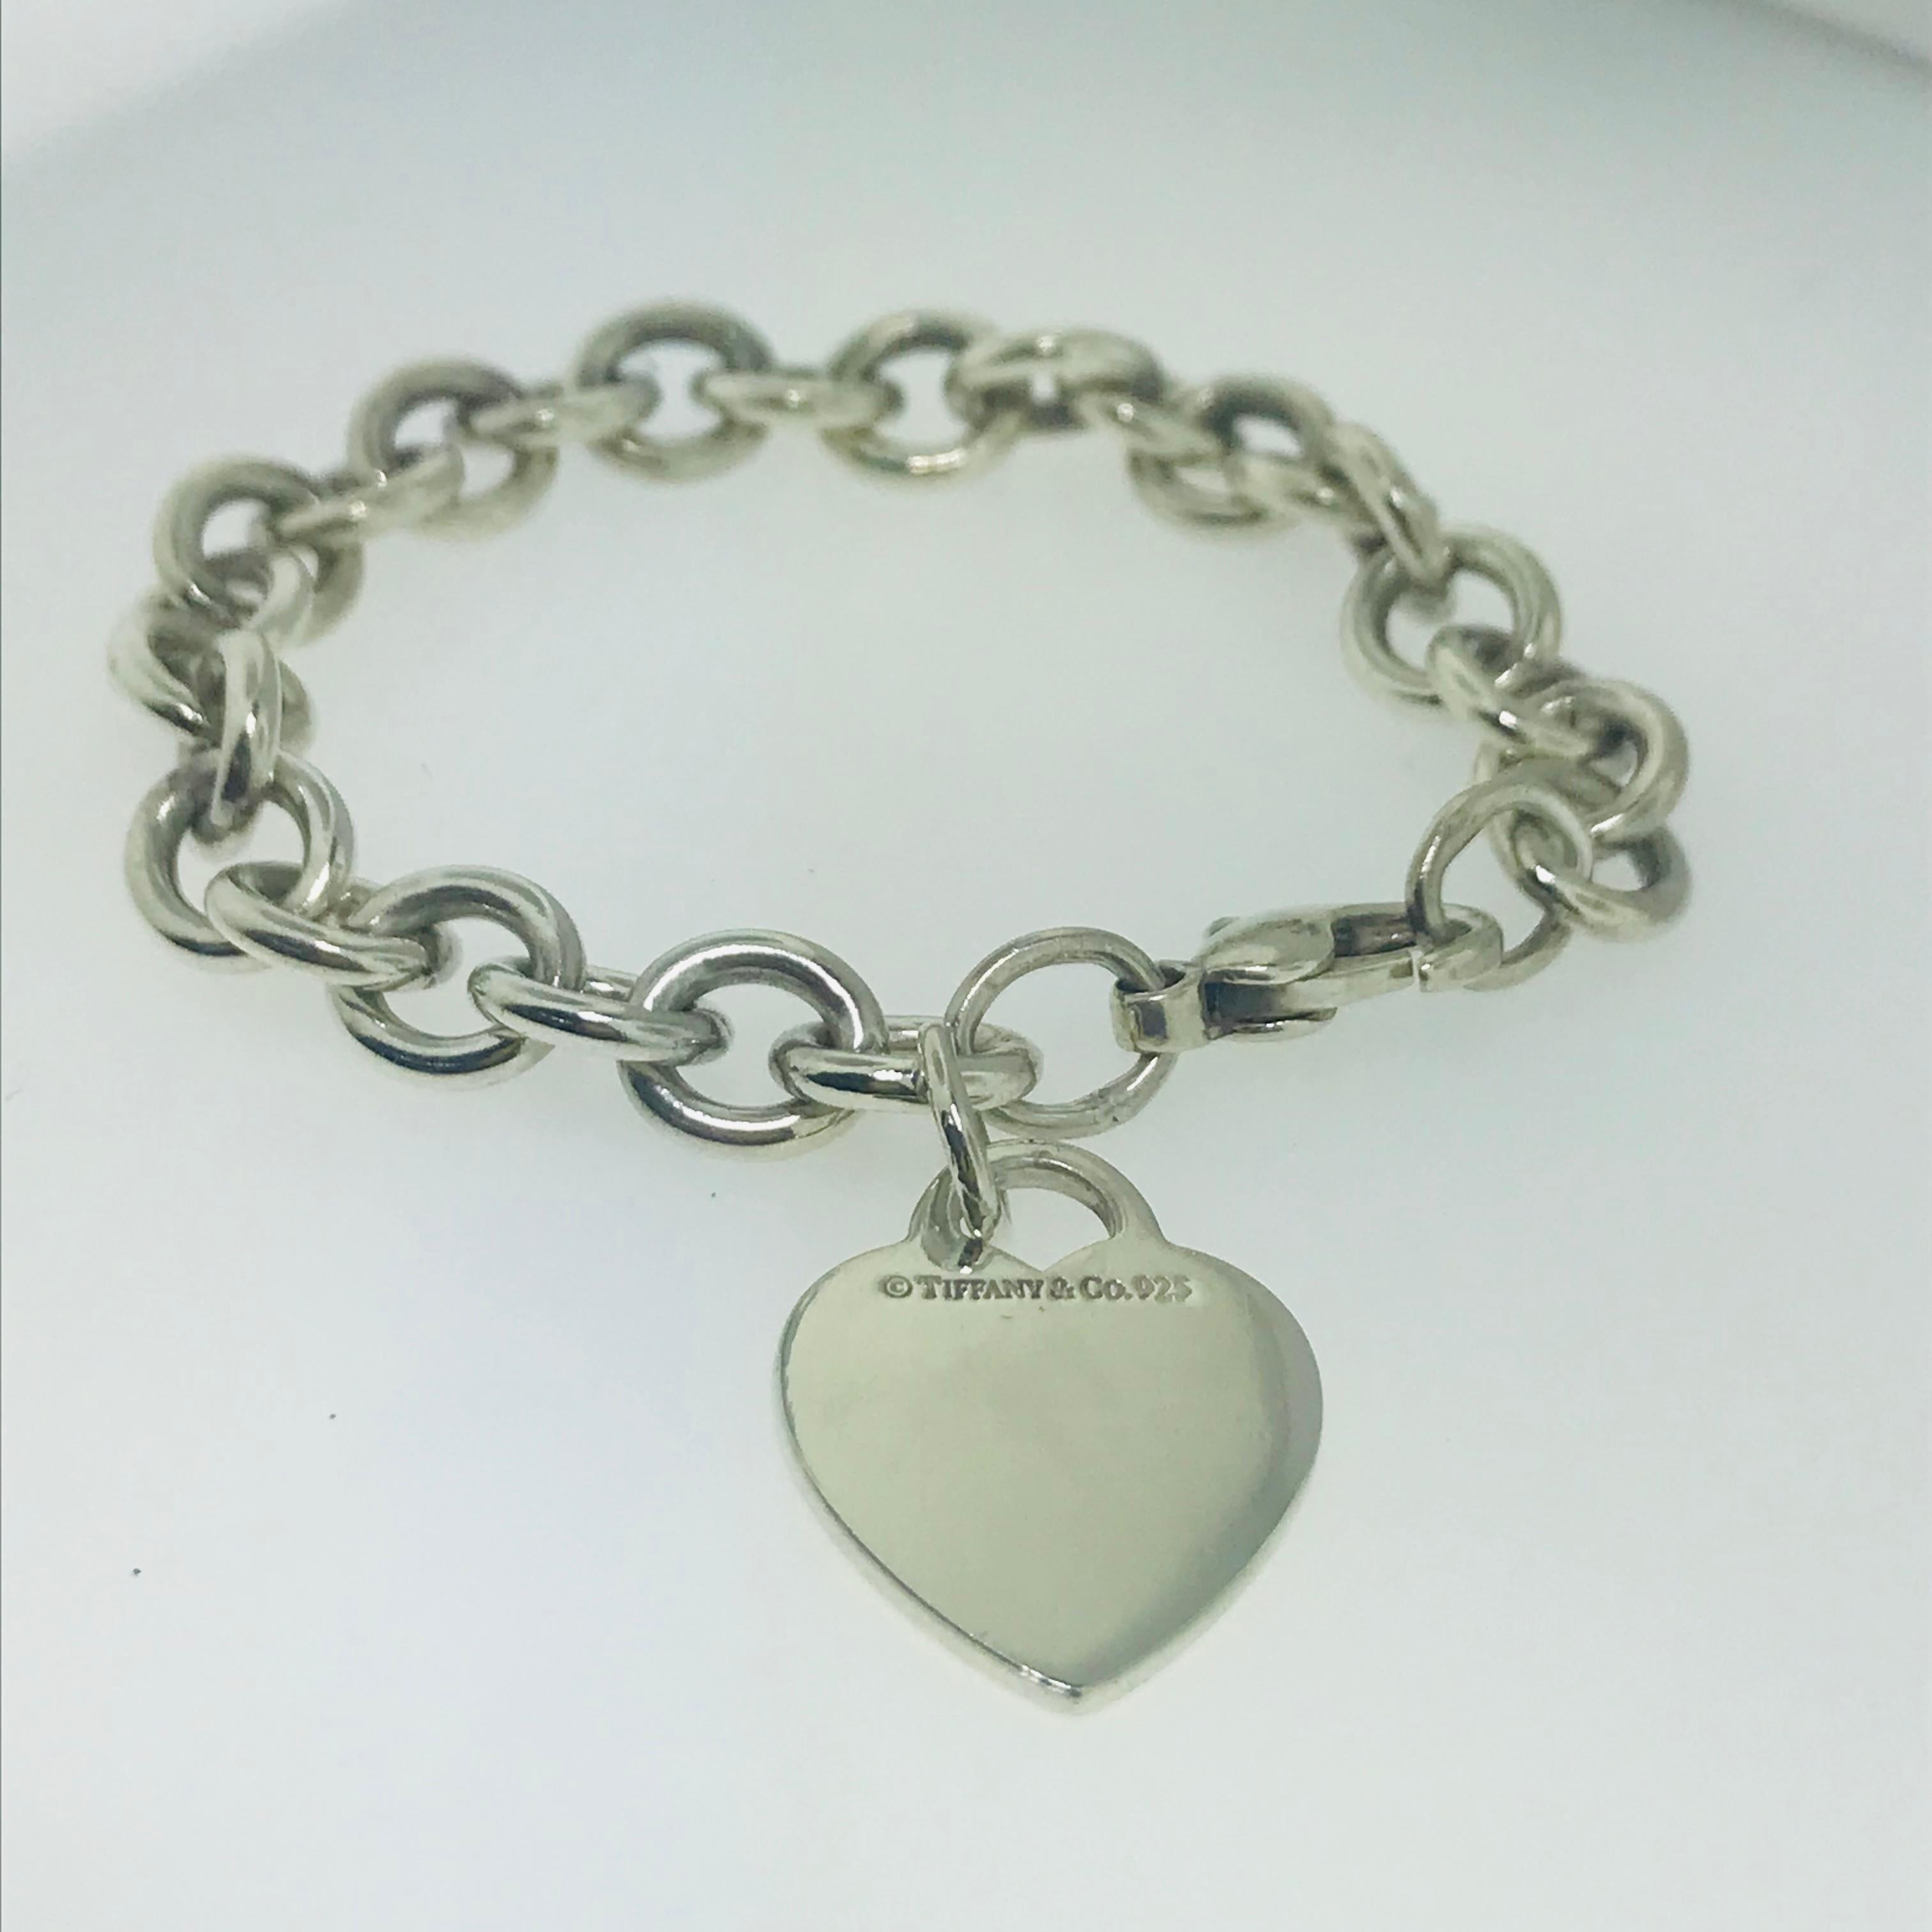 Women's Tiffany & Co. Charm Bracelet with Heart Charm in Sterling Silver